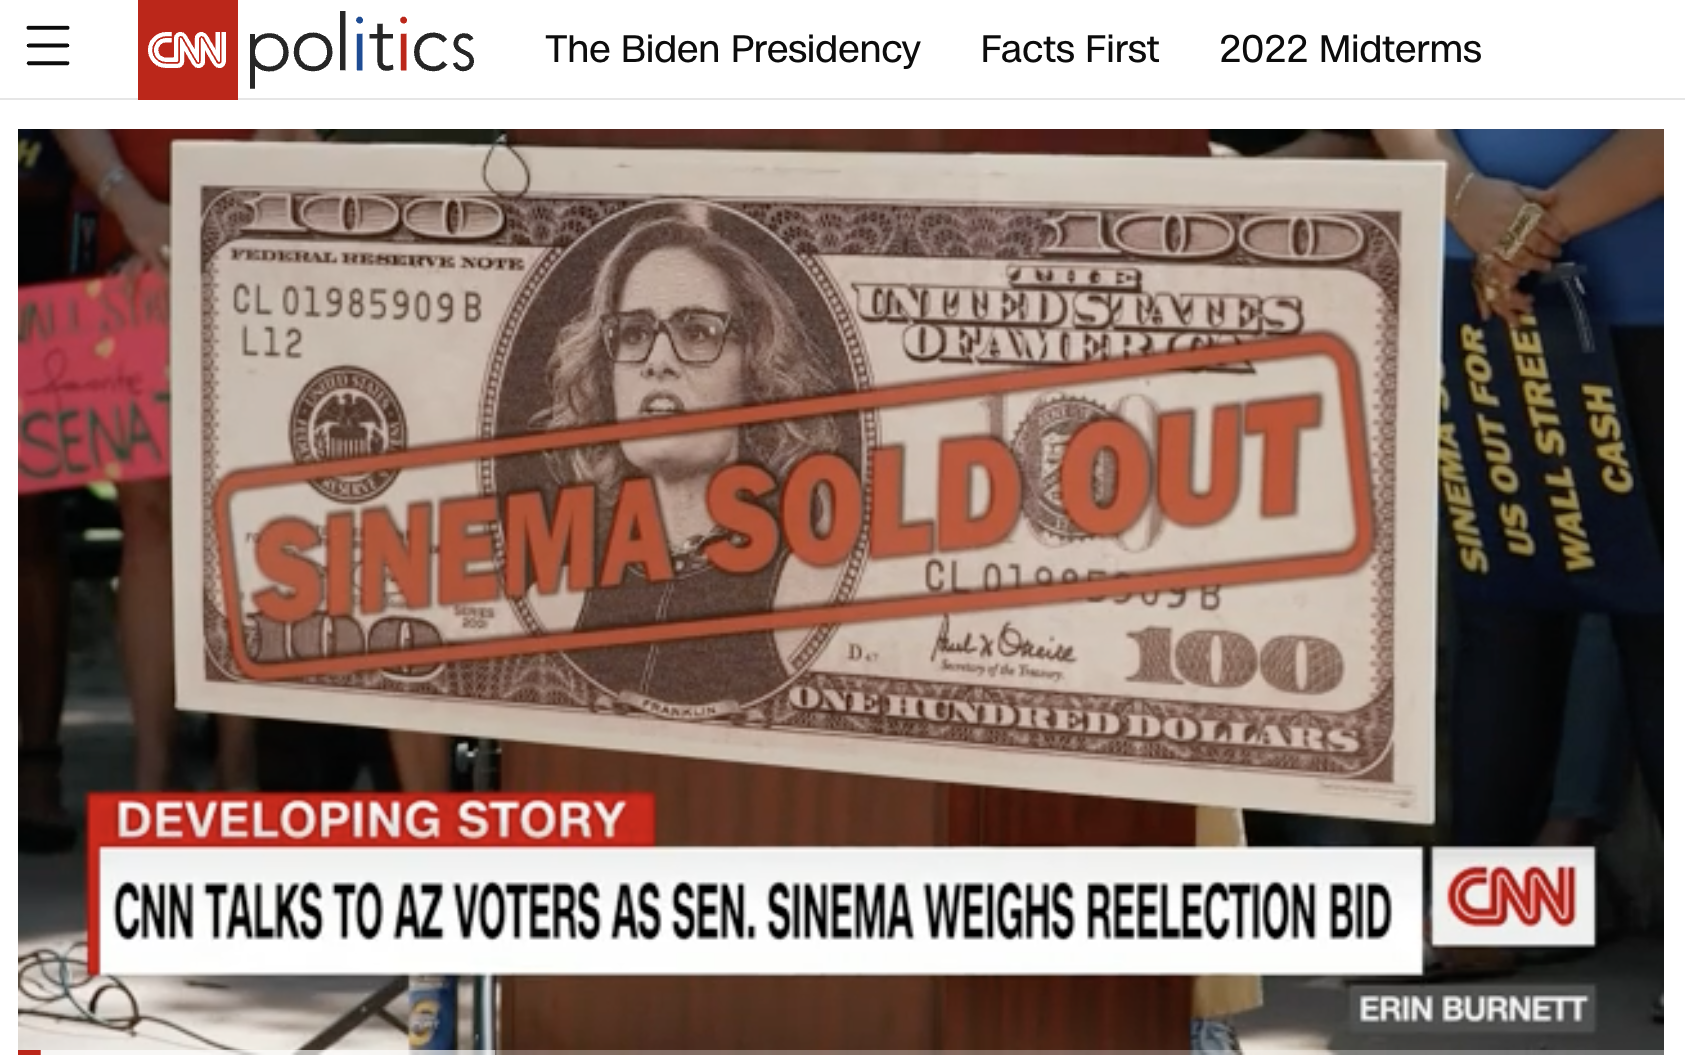 CNN Headline: "CNN Talks to AZ Voters as Sen. Sinema Weighs Reelection Bid"